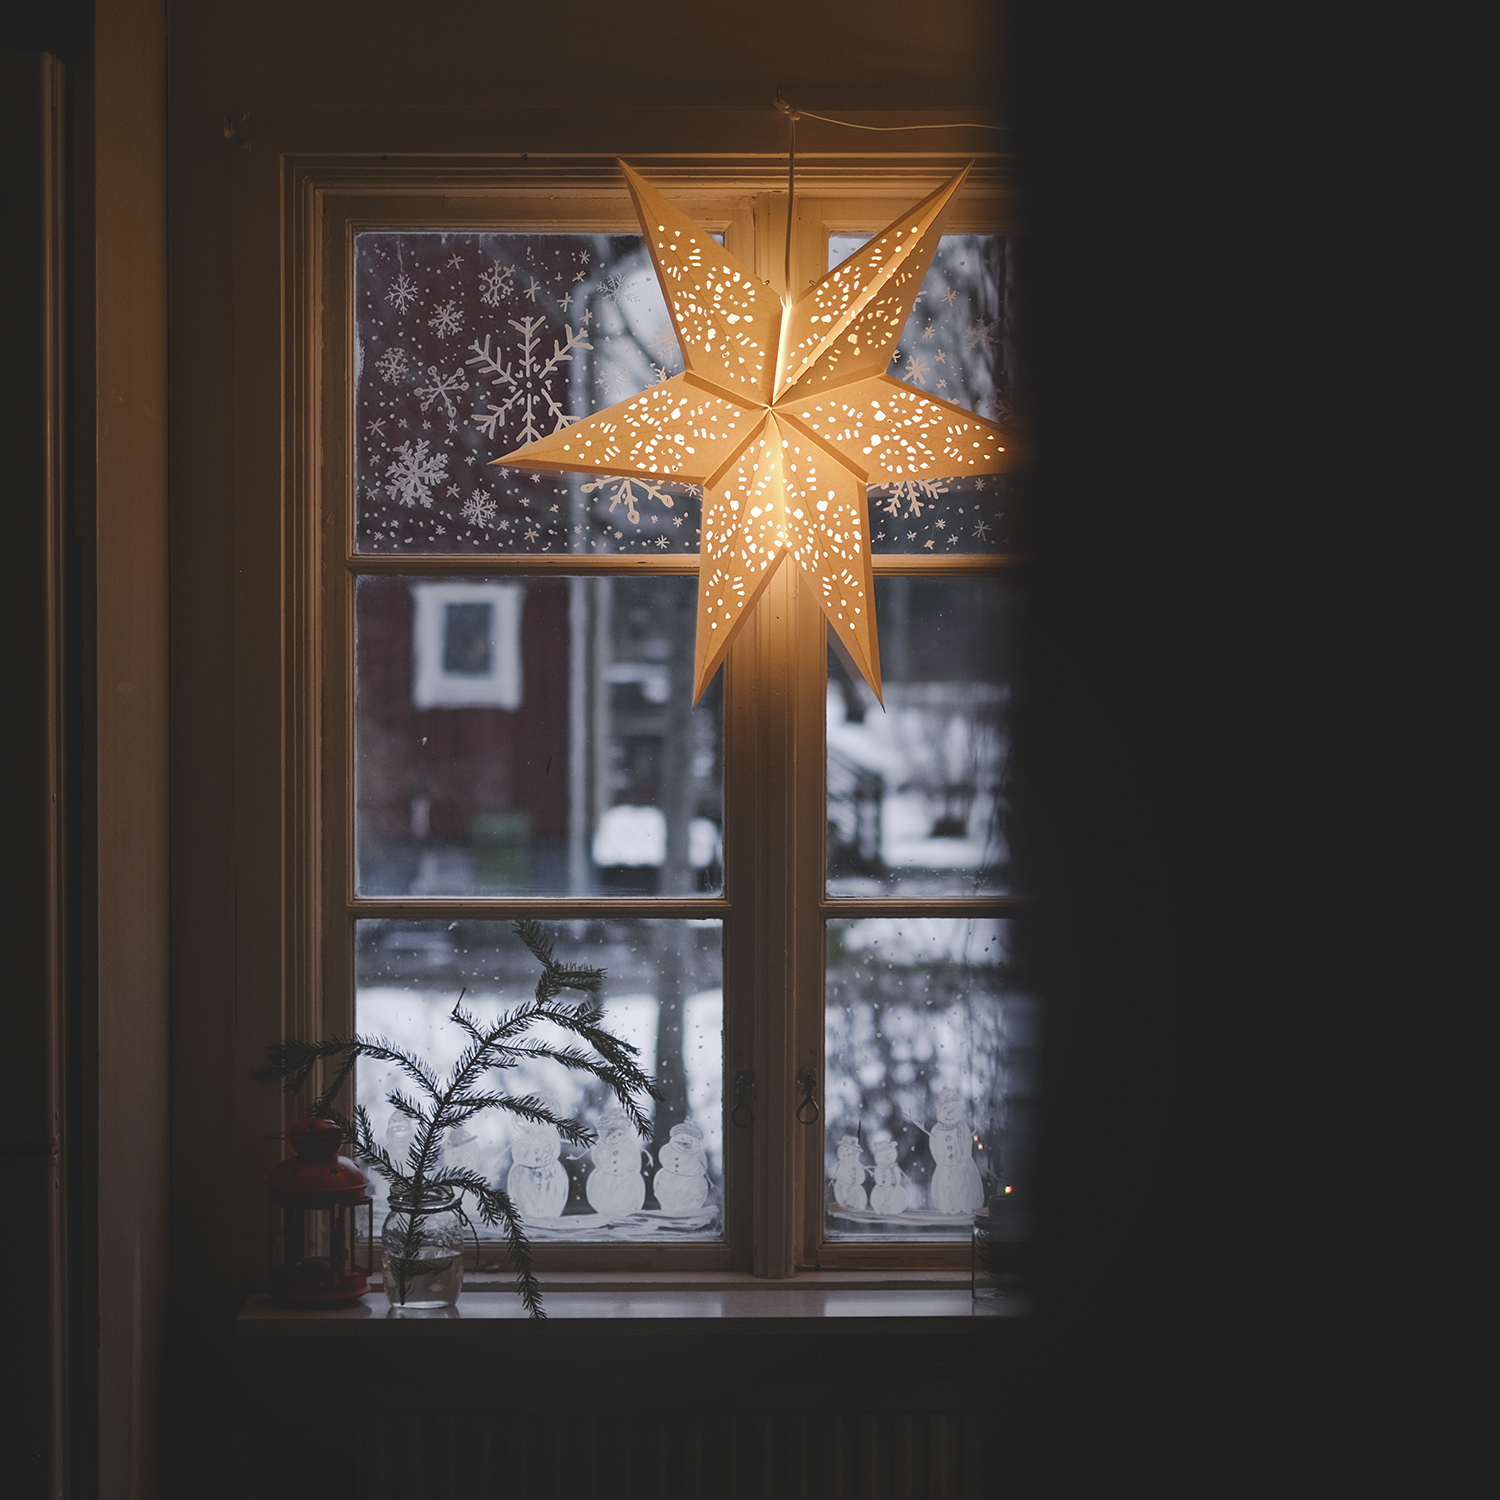 Lighting stars in the window, Scandi swedish Christmas holidays, www.Fenne.be